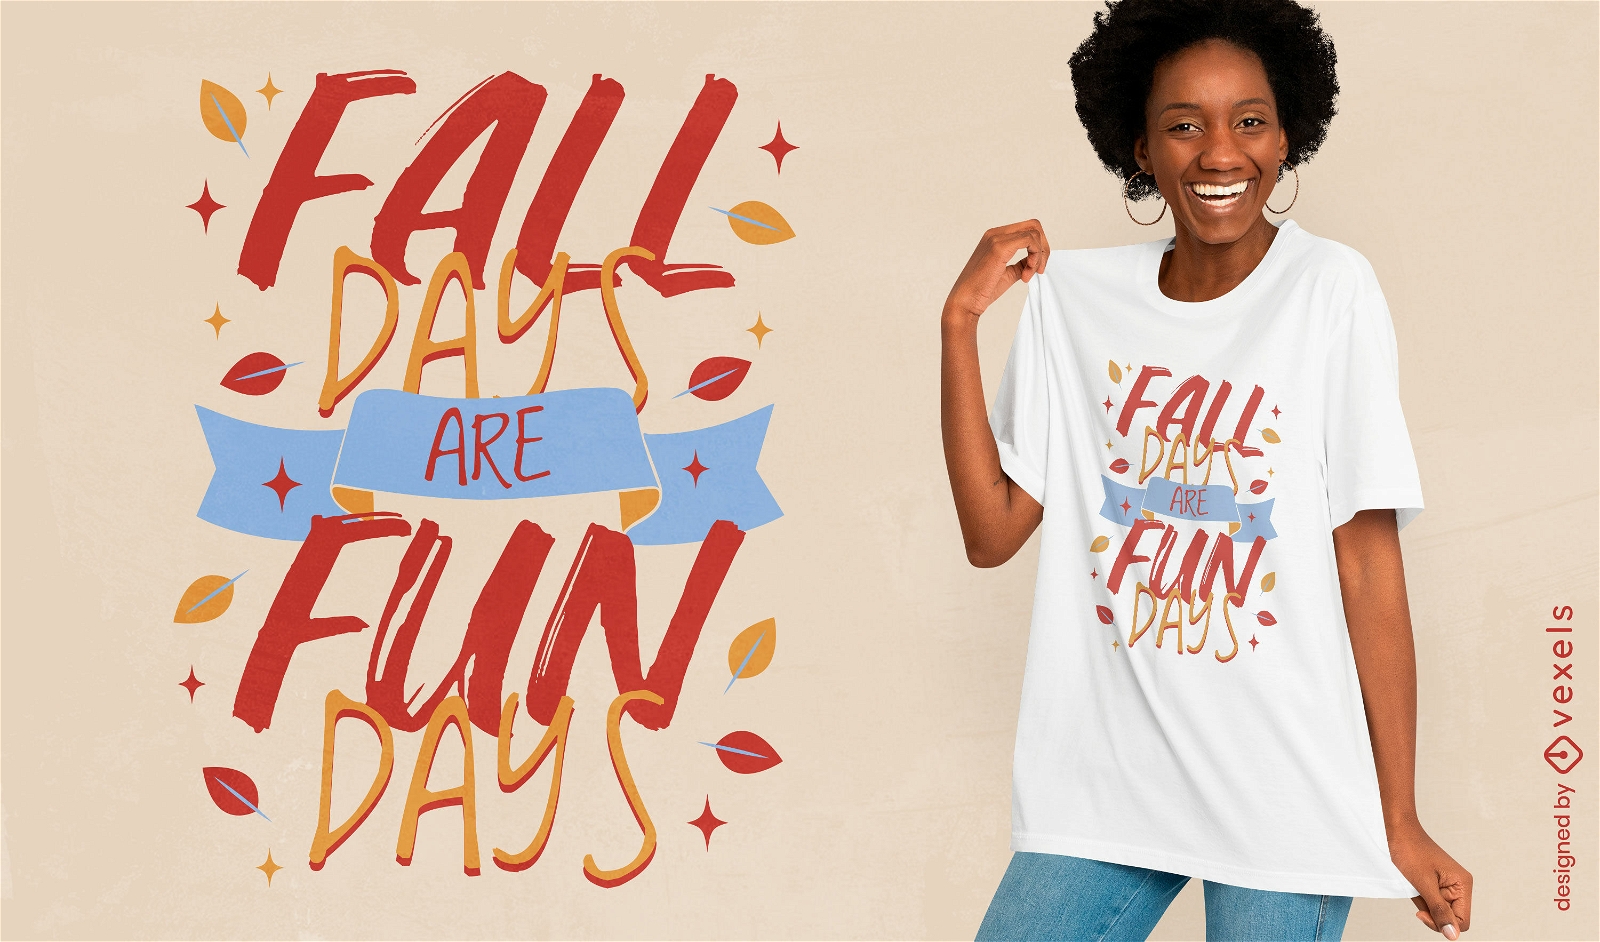 Fall days fun days quote t-shirt design